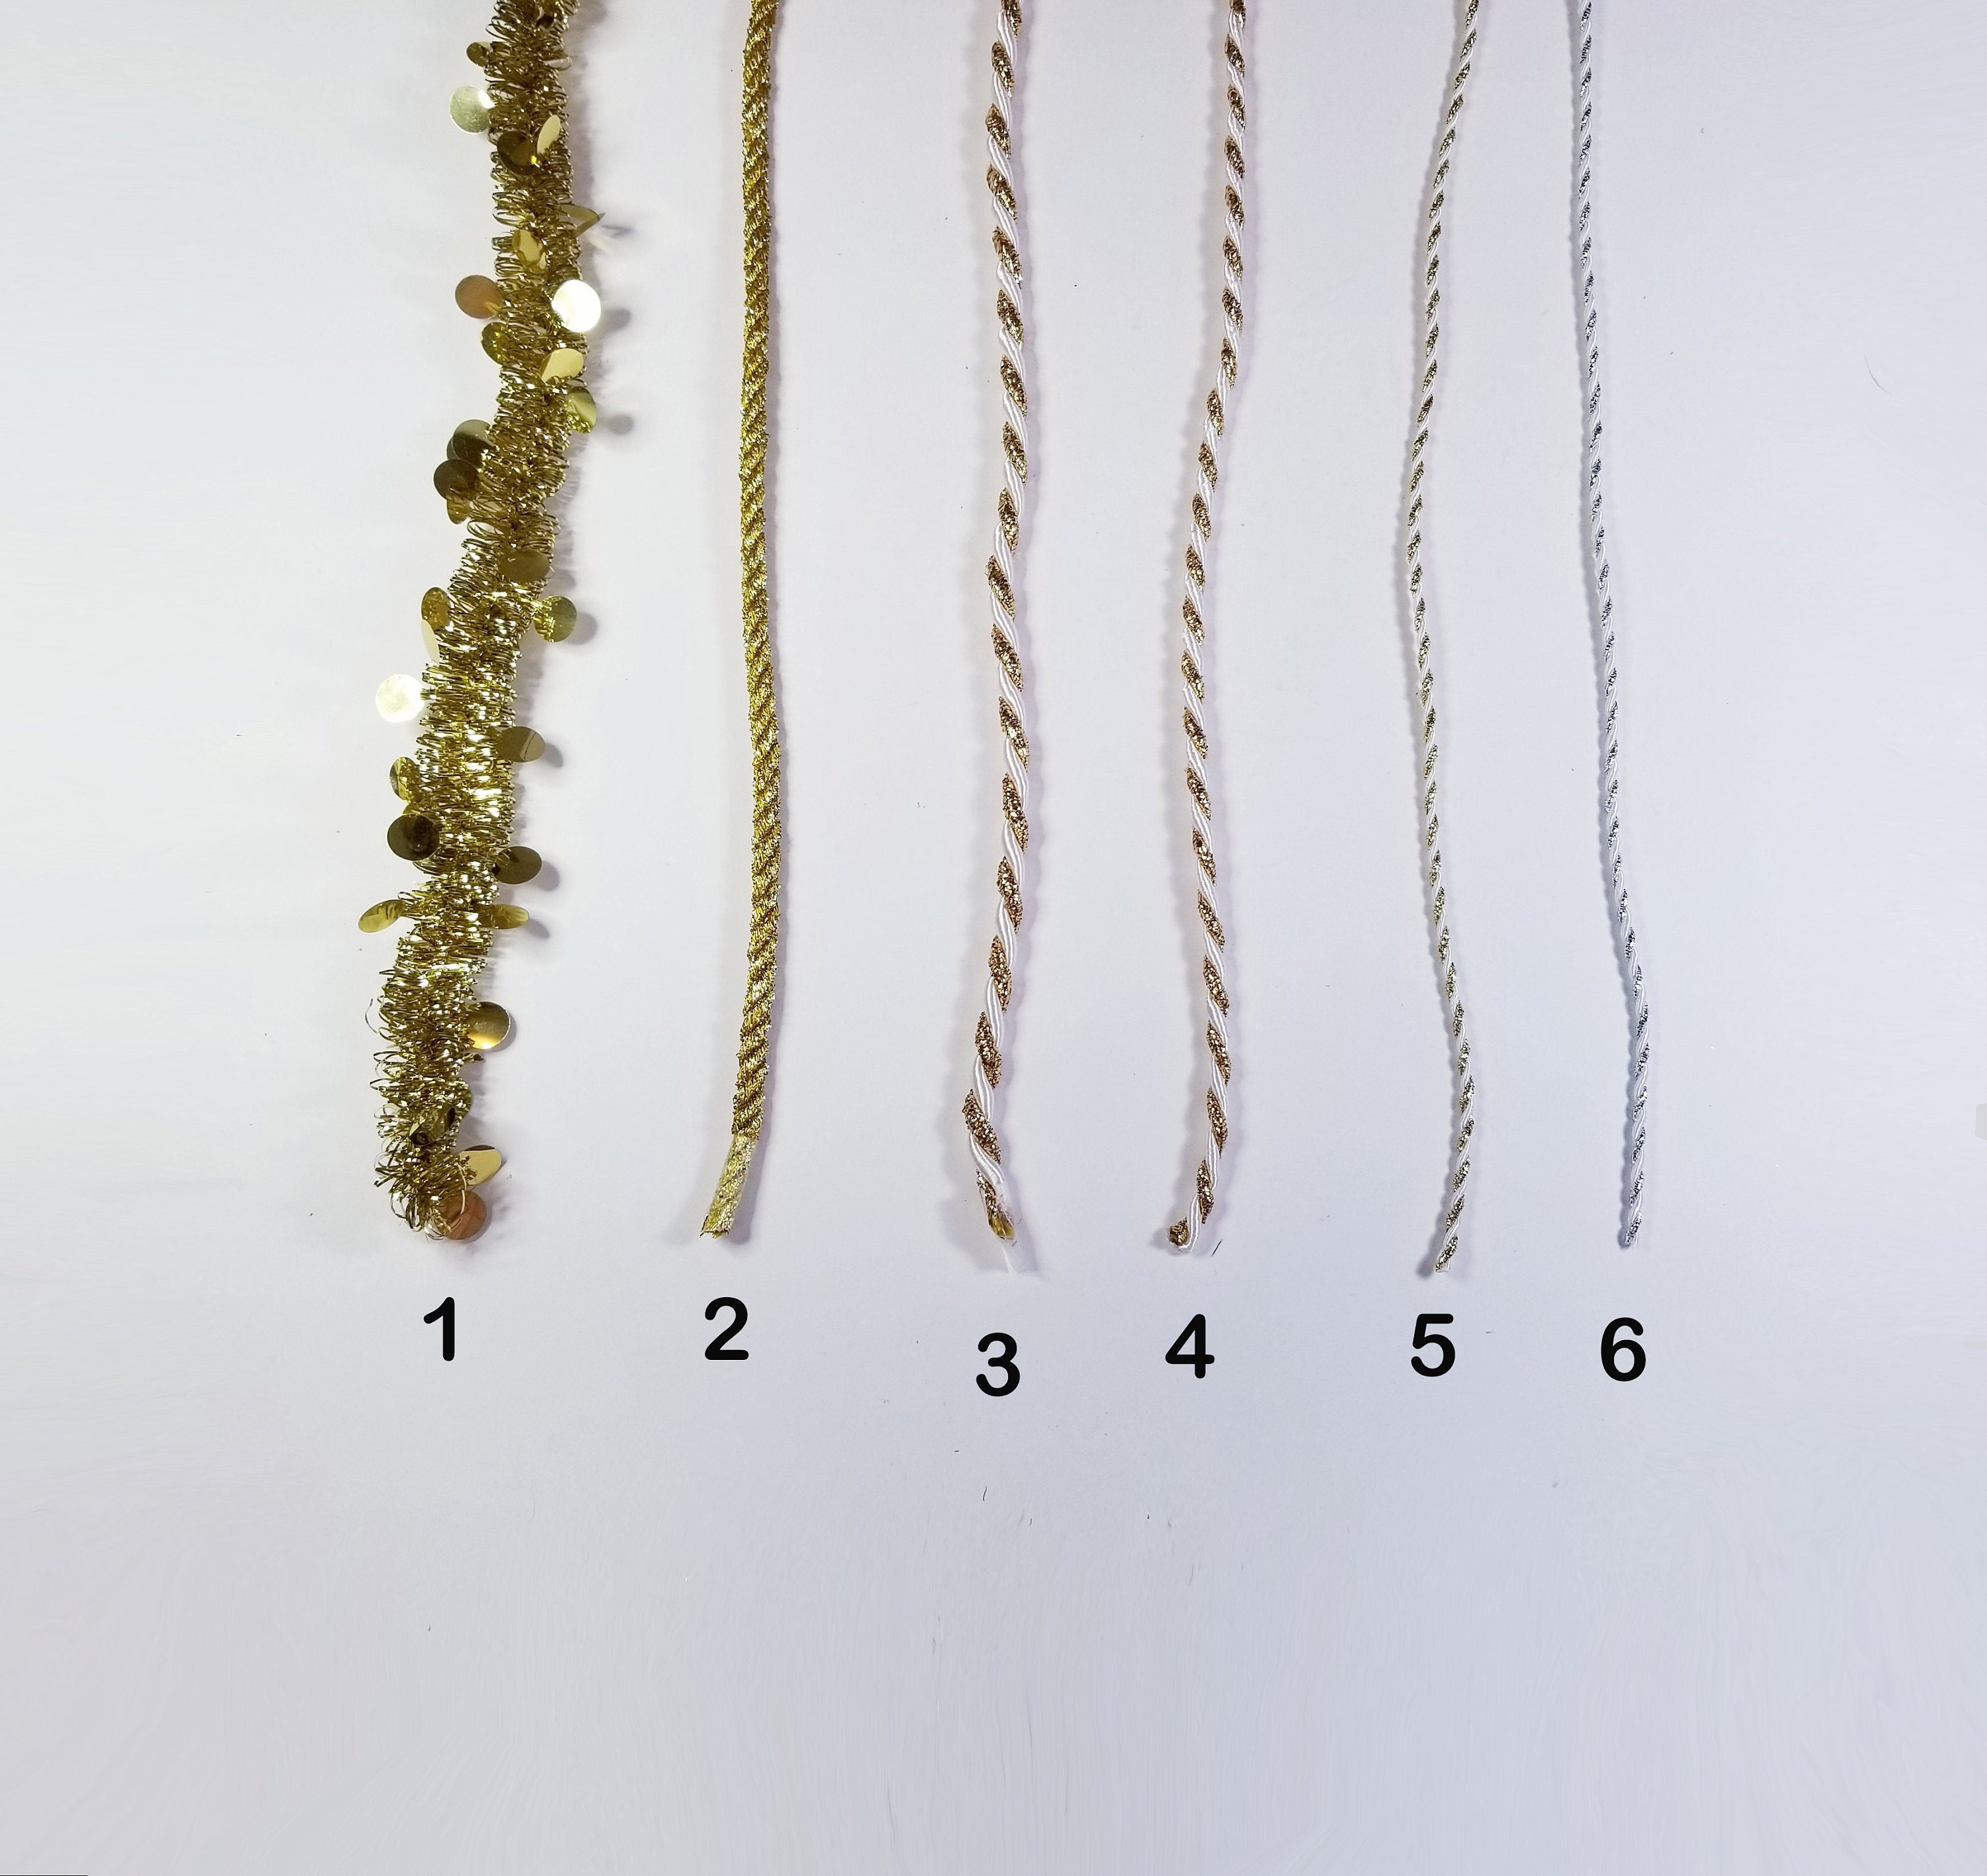 100Yards 1mm Variegated Metallic Tinsel Twine Thread Jewelry String Beading  Cord